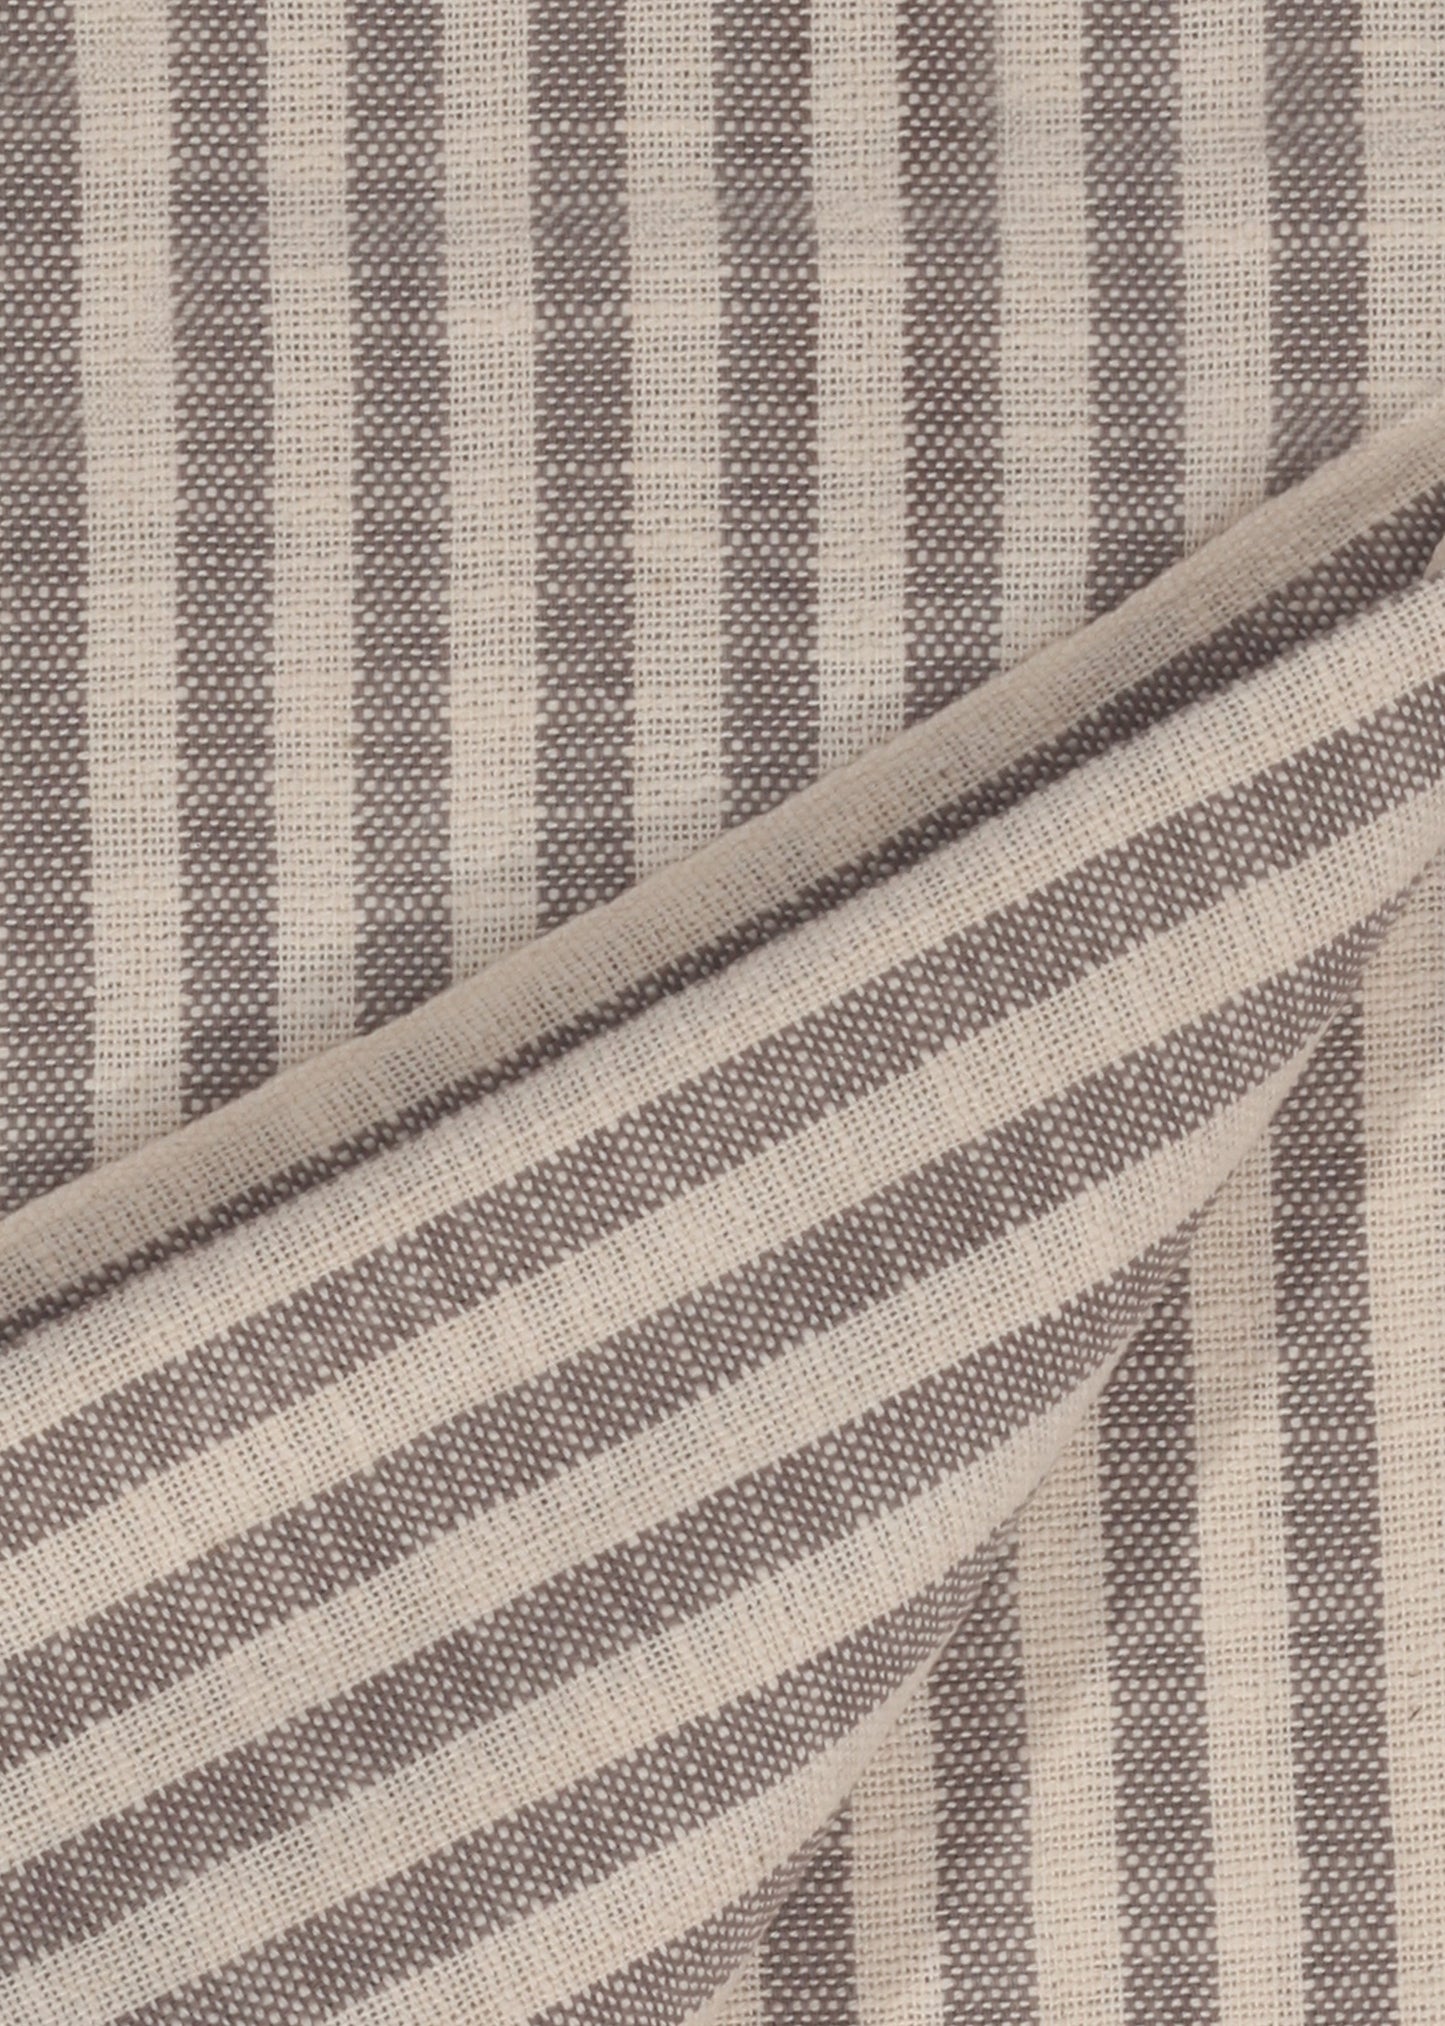 Striped Grey Cushion Cover